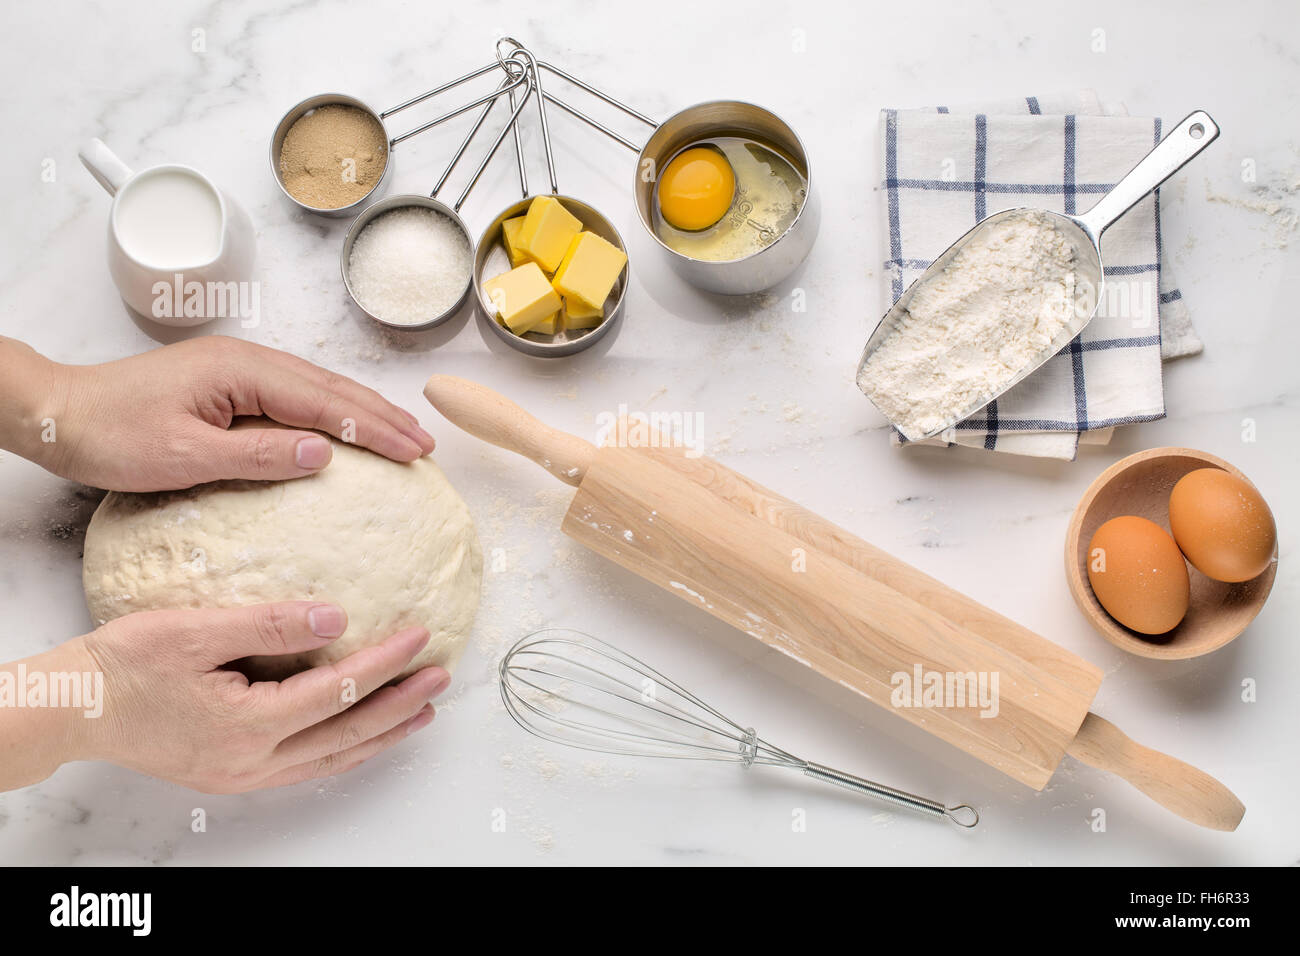 Baking cake, dough recipe ingredients (eggs, flour, milk, butter, sugar) on white table. Stock Photo